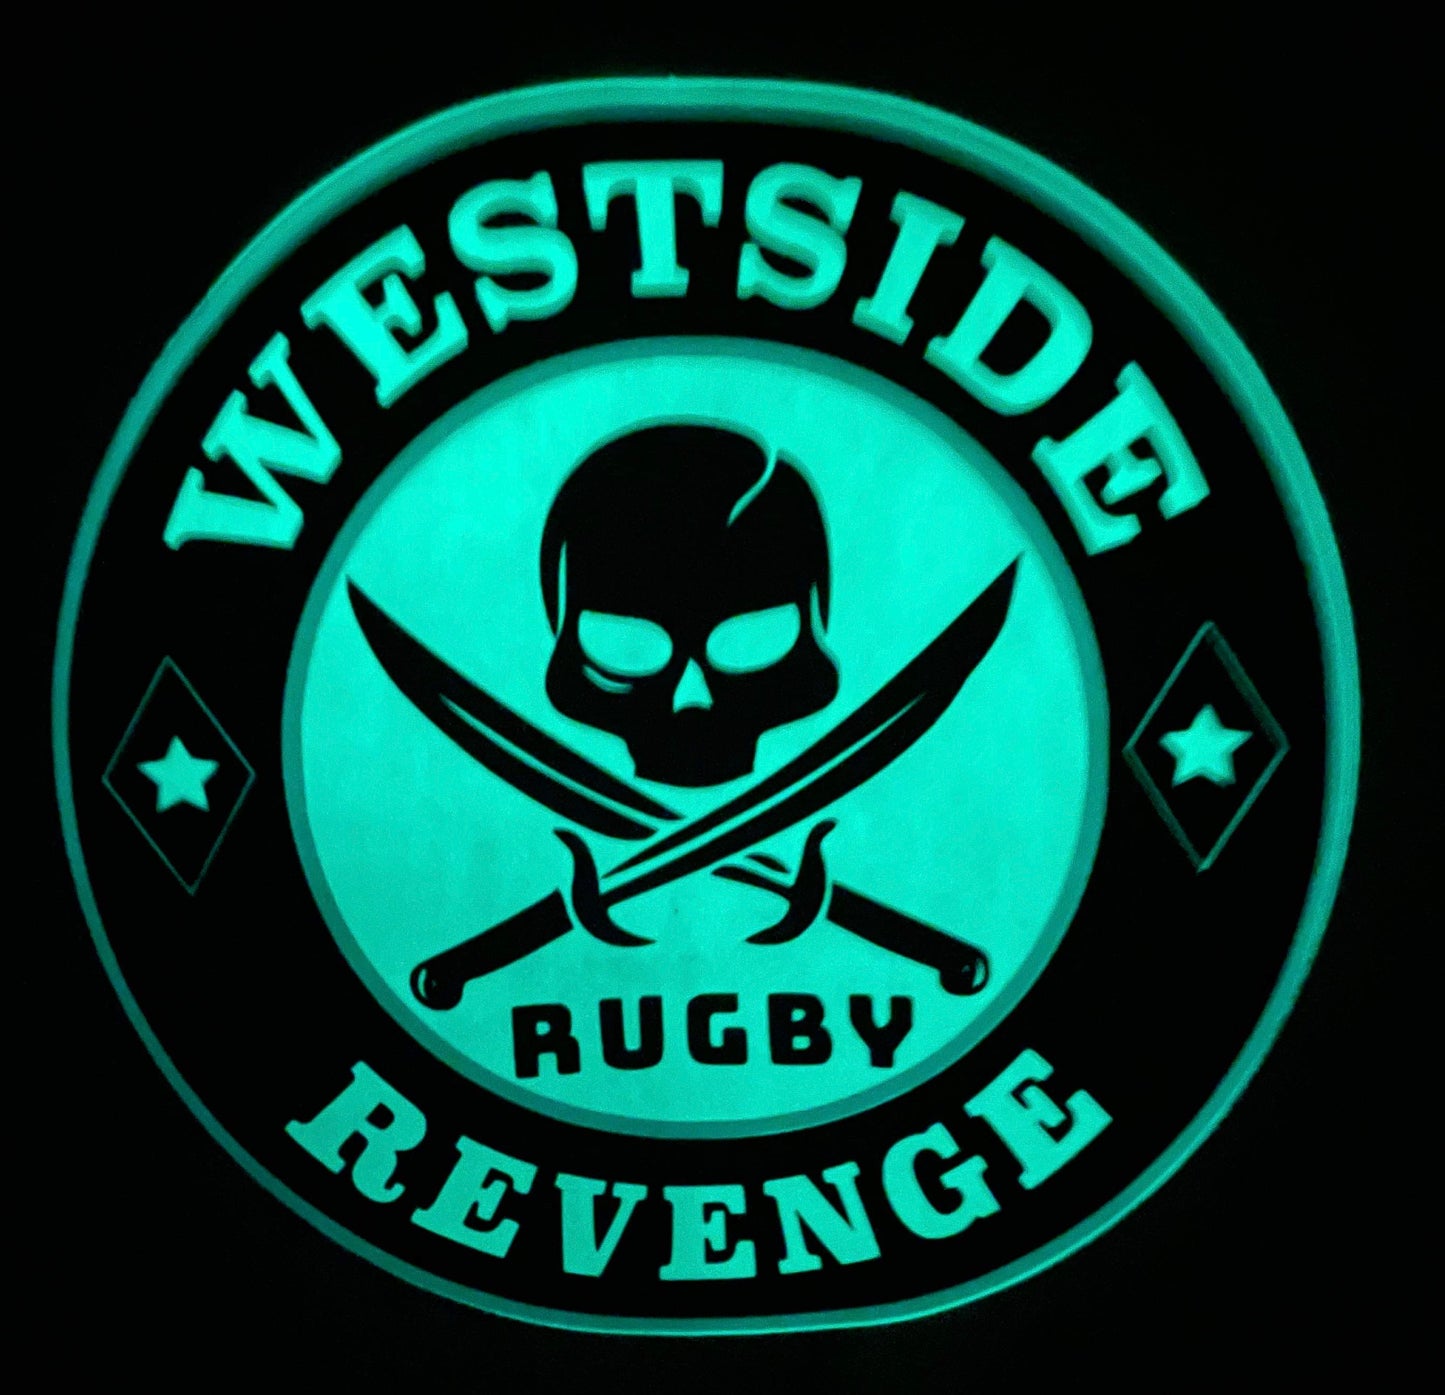 Glow in the Dark, Drawstring Bag with Westside Revenge Logo